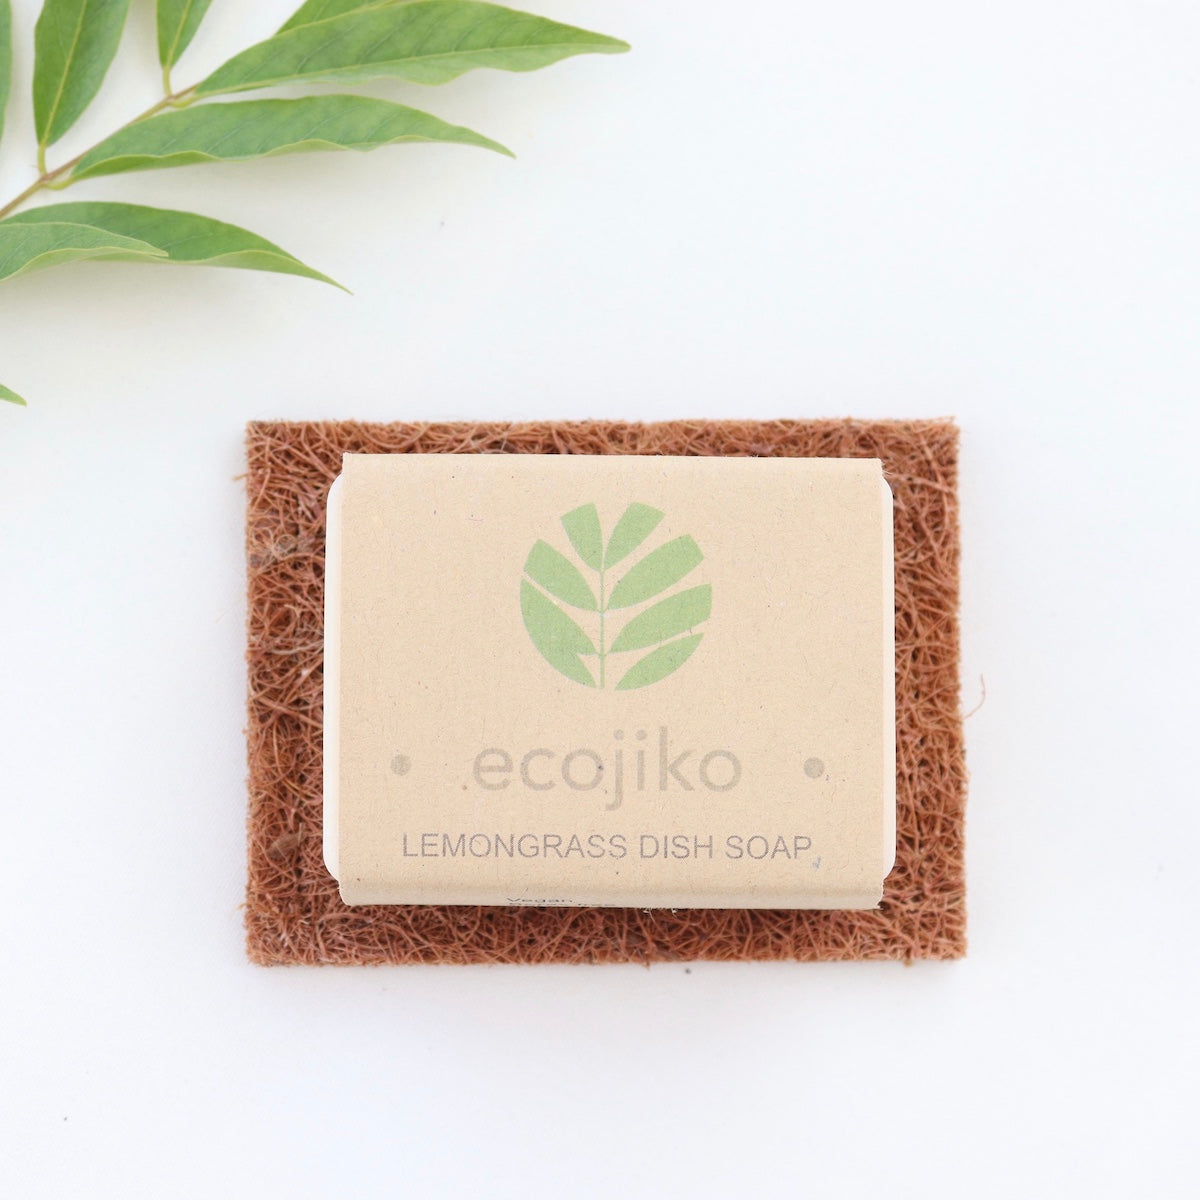 ecojiko lemongrass dishsoap & coconut coir soap rest